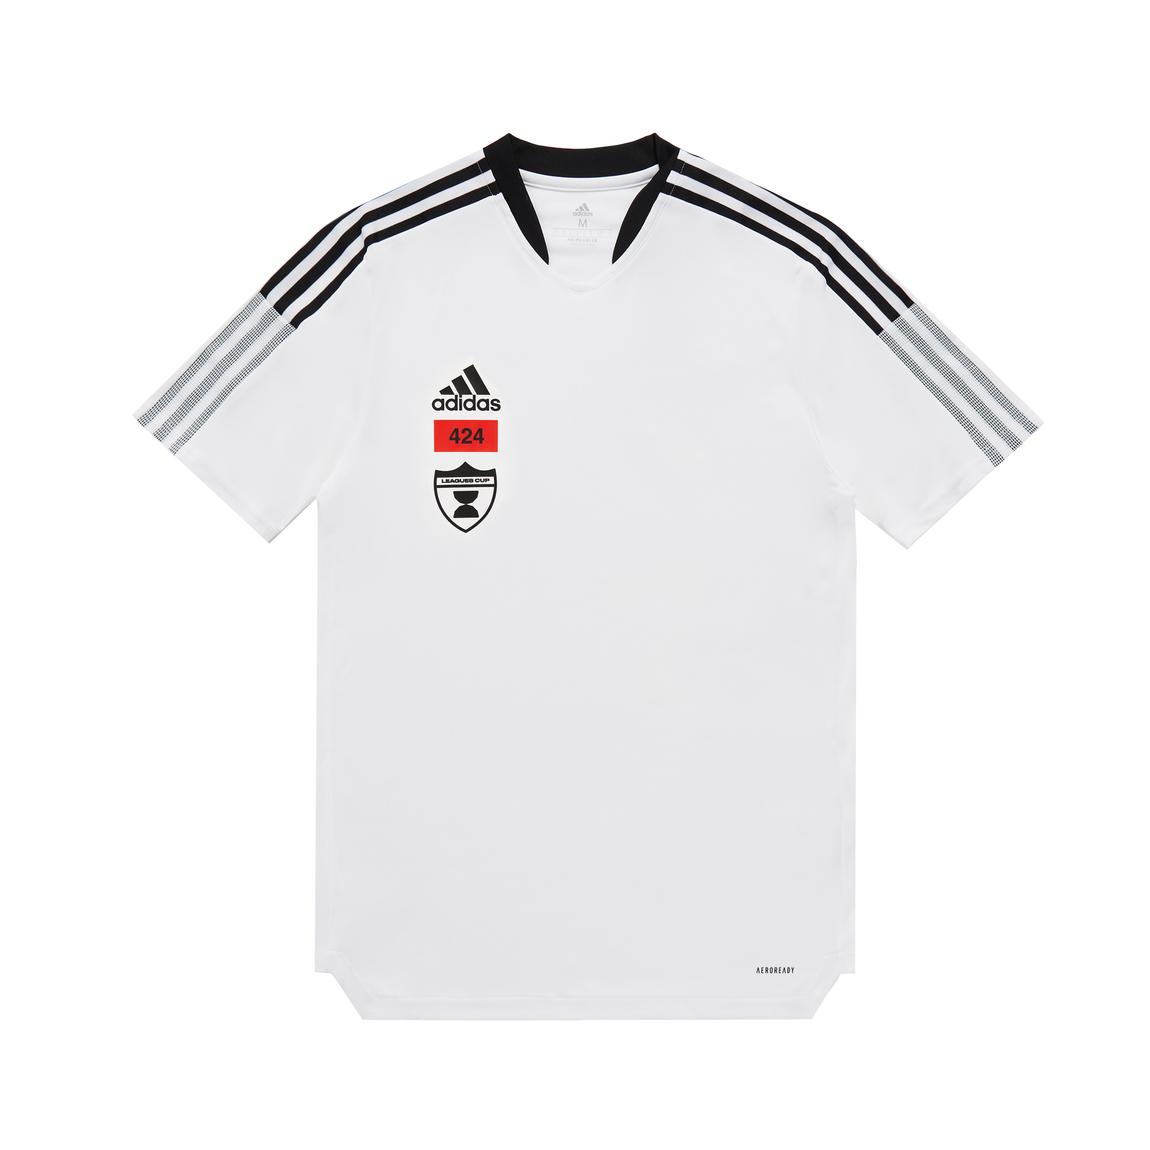 Adidas x 424 MLS Tiro21 Training Jersey (White) - Adidas x 424 MLS Tiro21 Training Jersey (White) - 